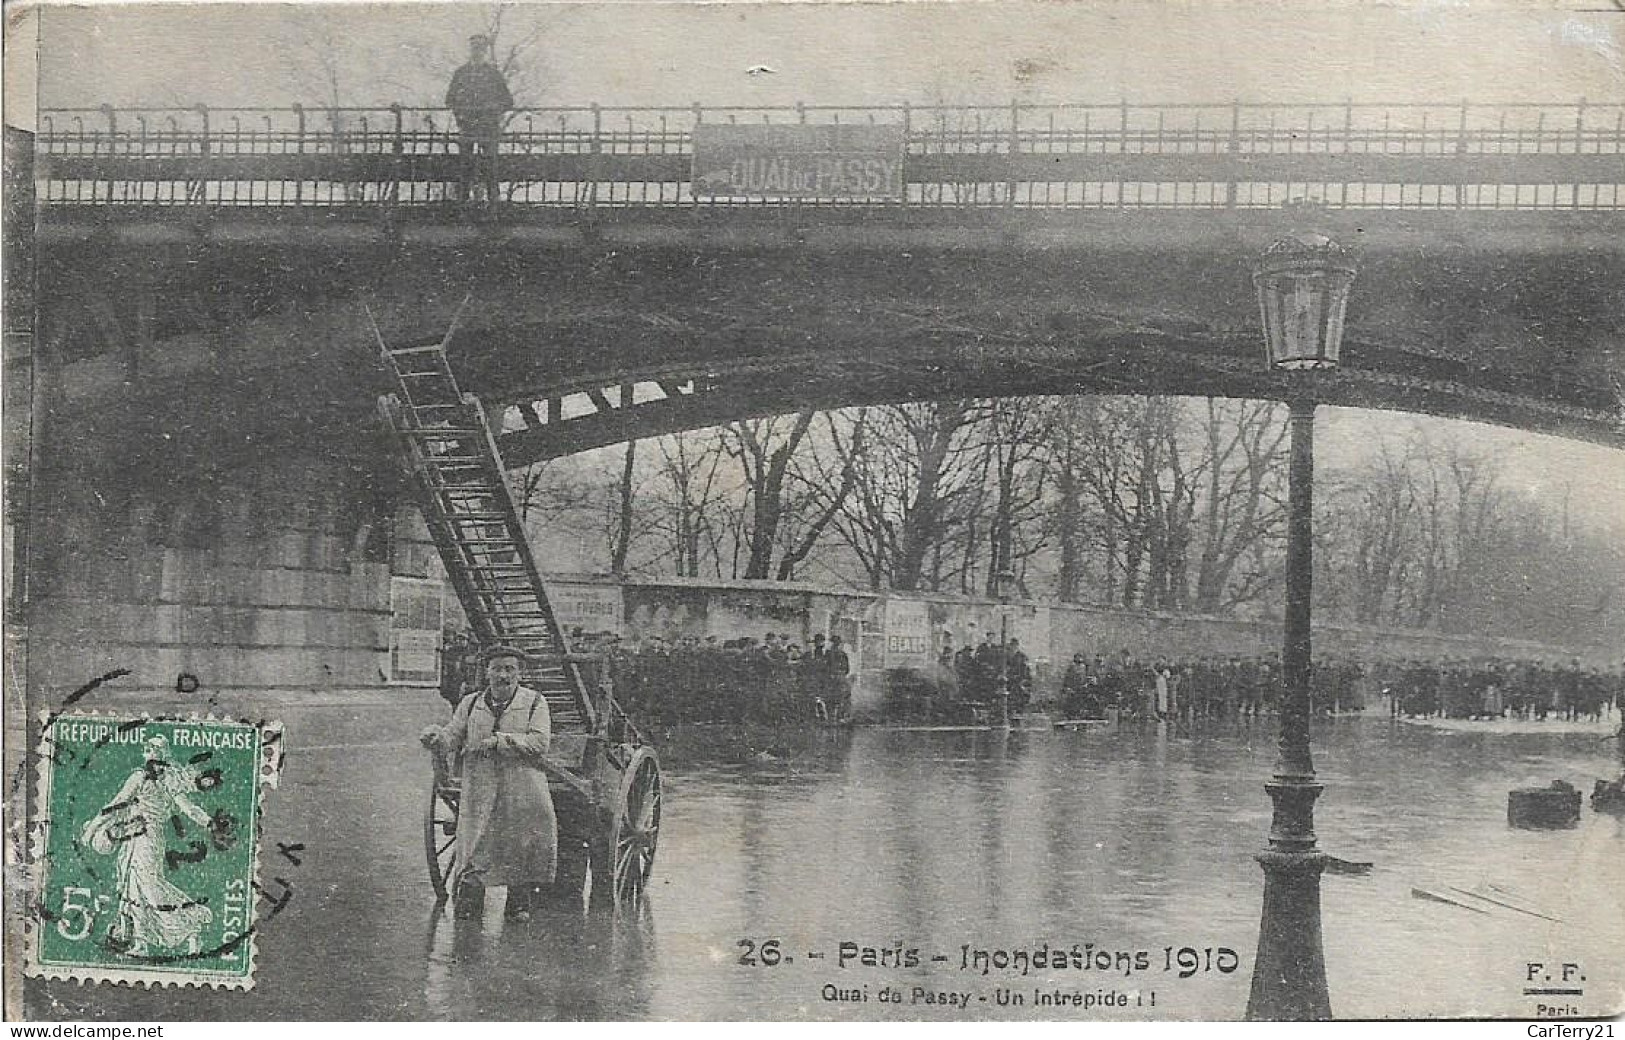 75. PARIS. INONDATIONS 1910. QUAI DE PASSY. UN INTREPIDE. - Inondations De 1910